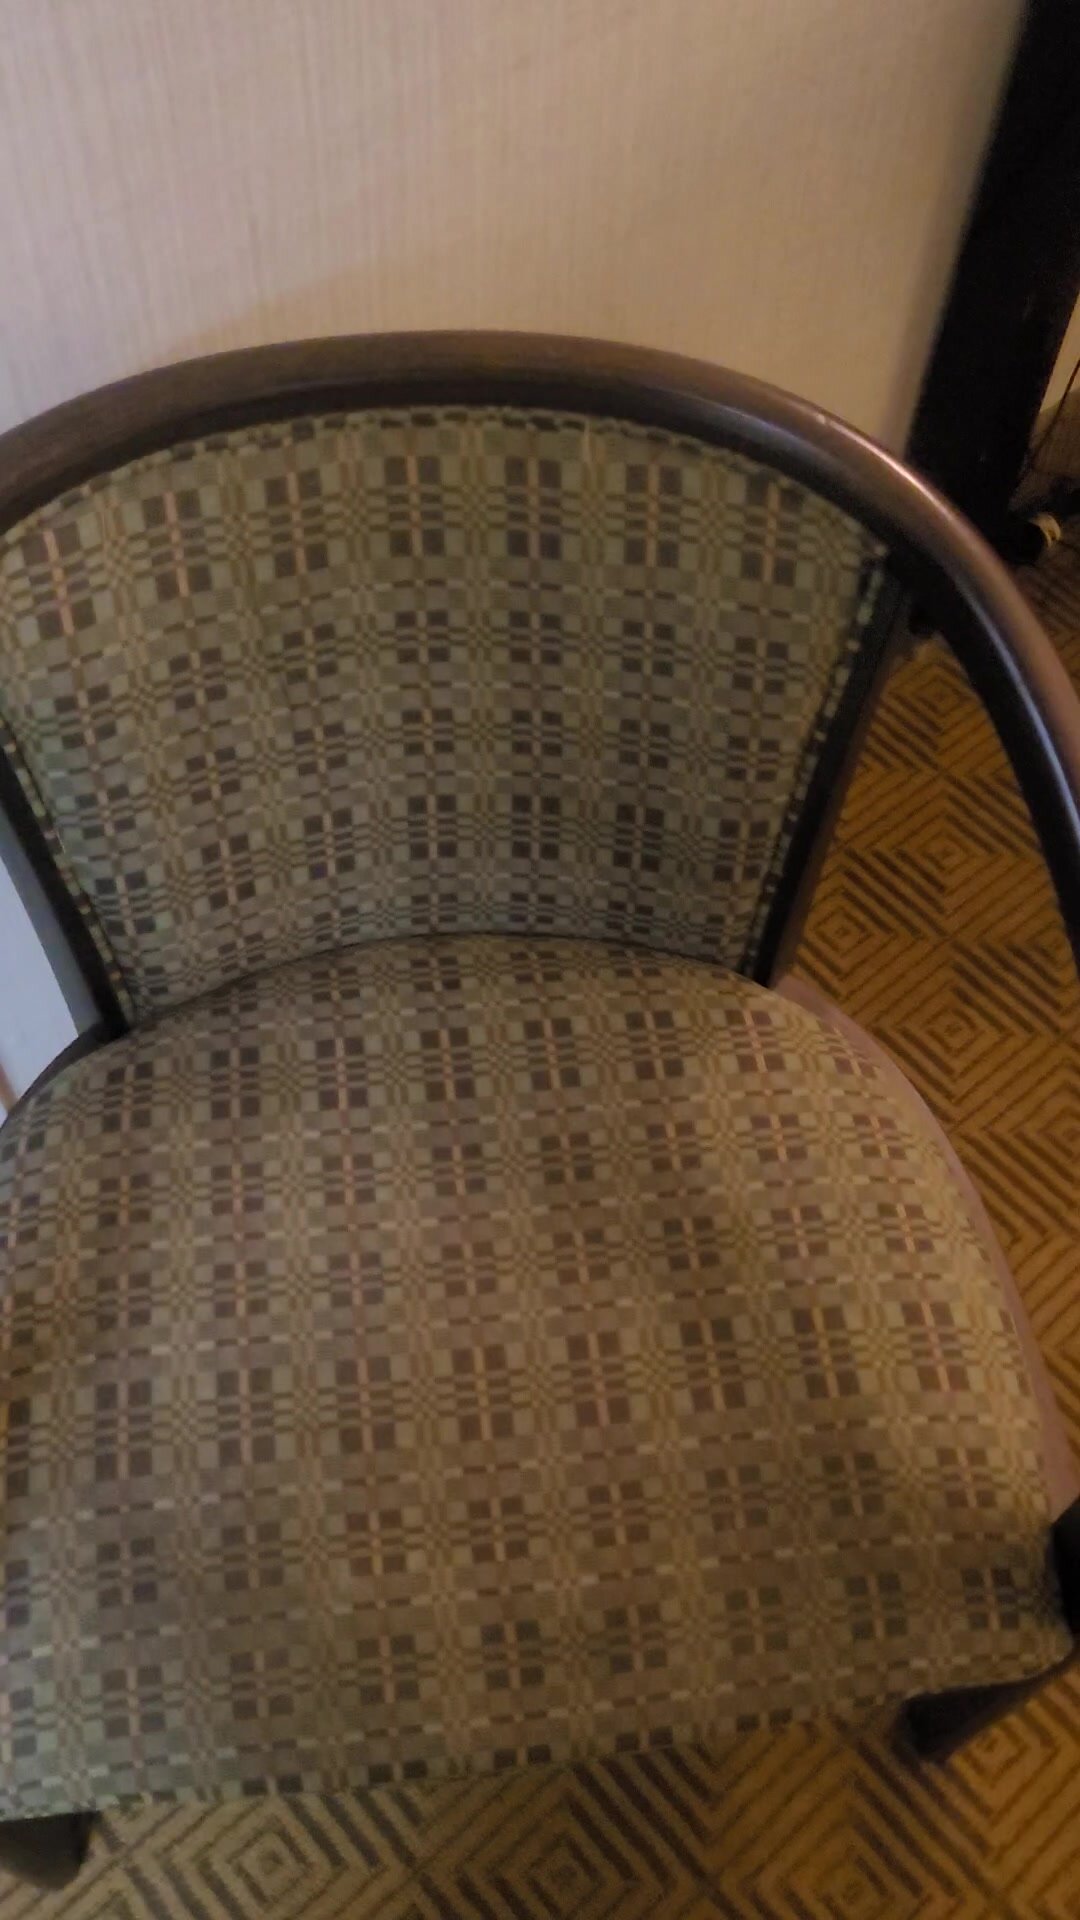 piss hotel chair marking